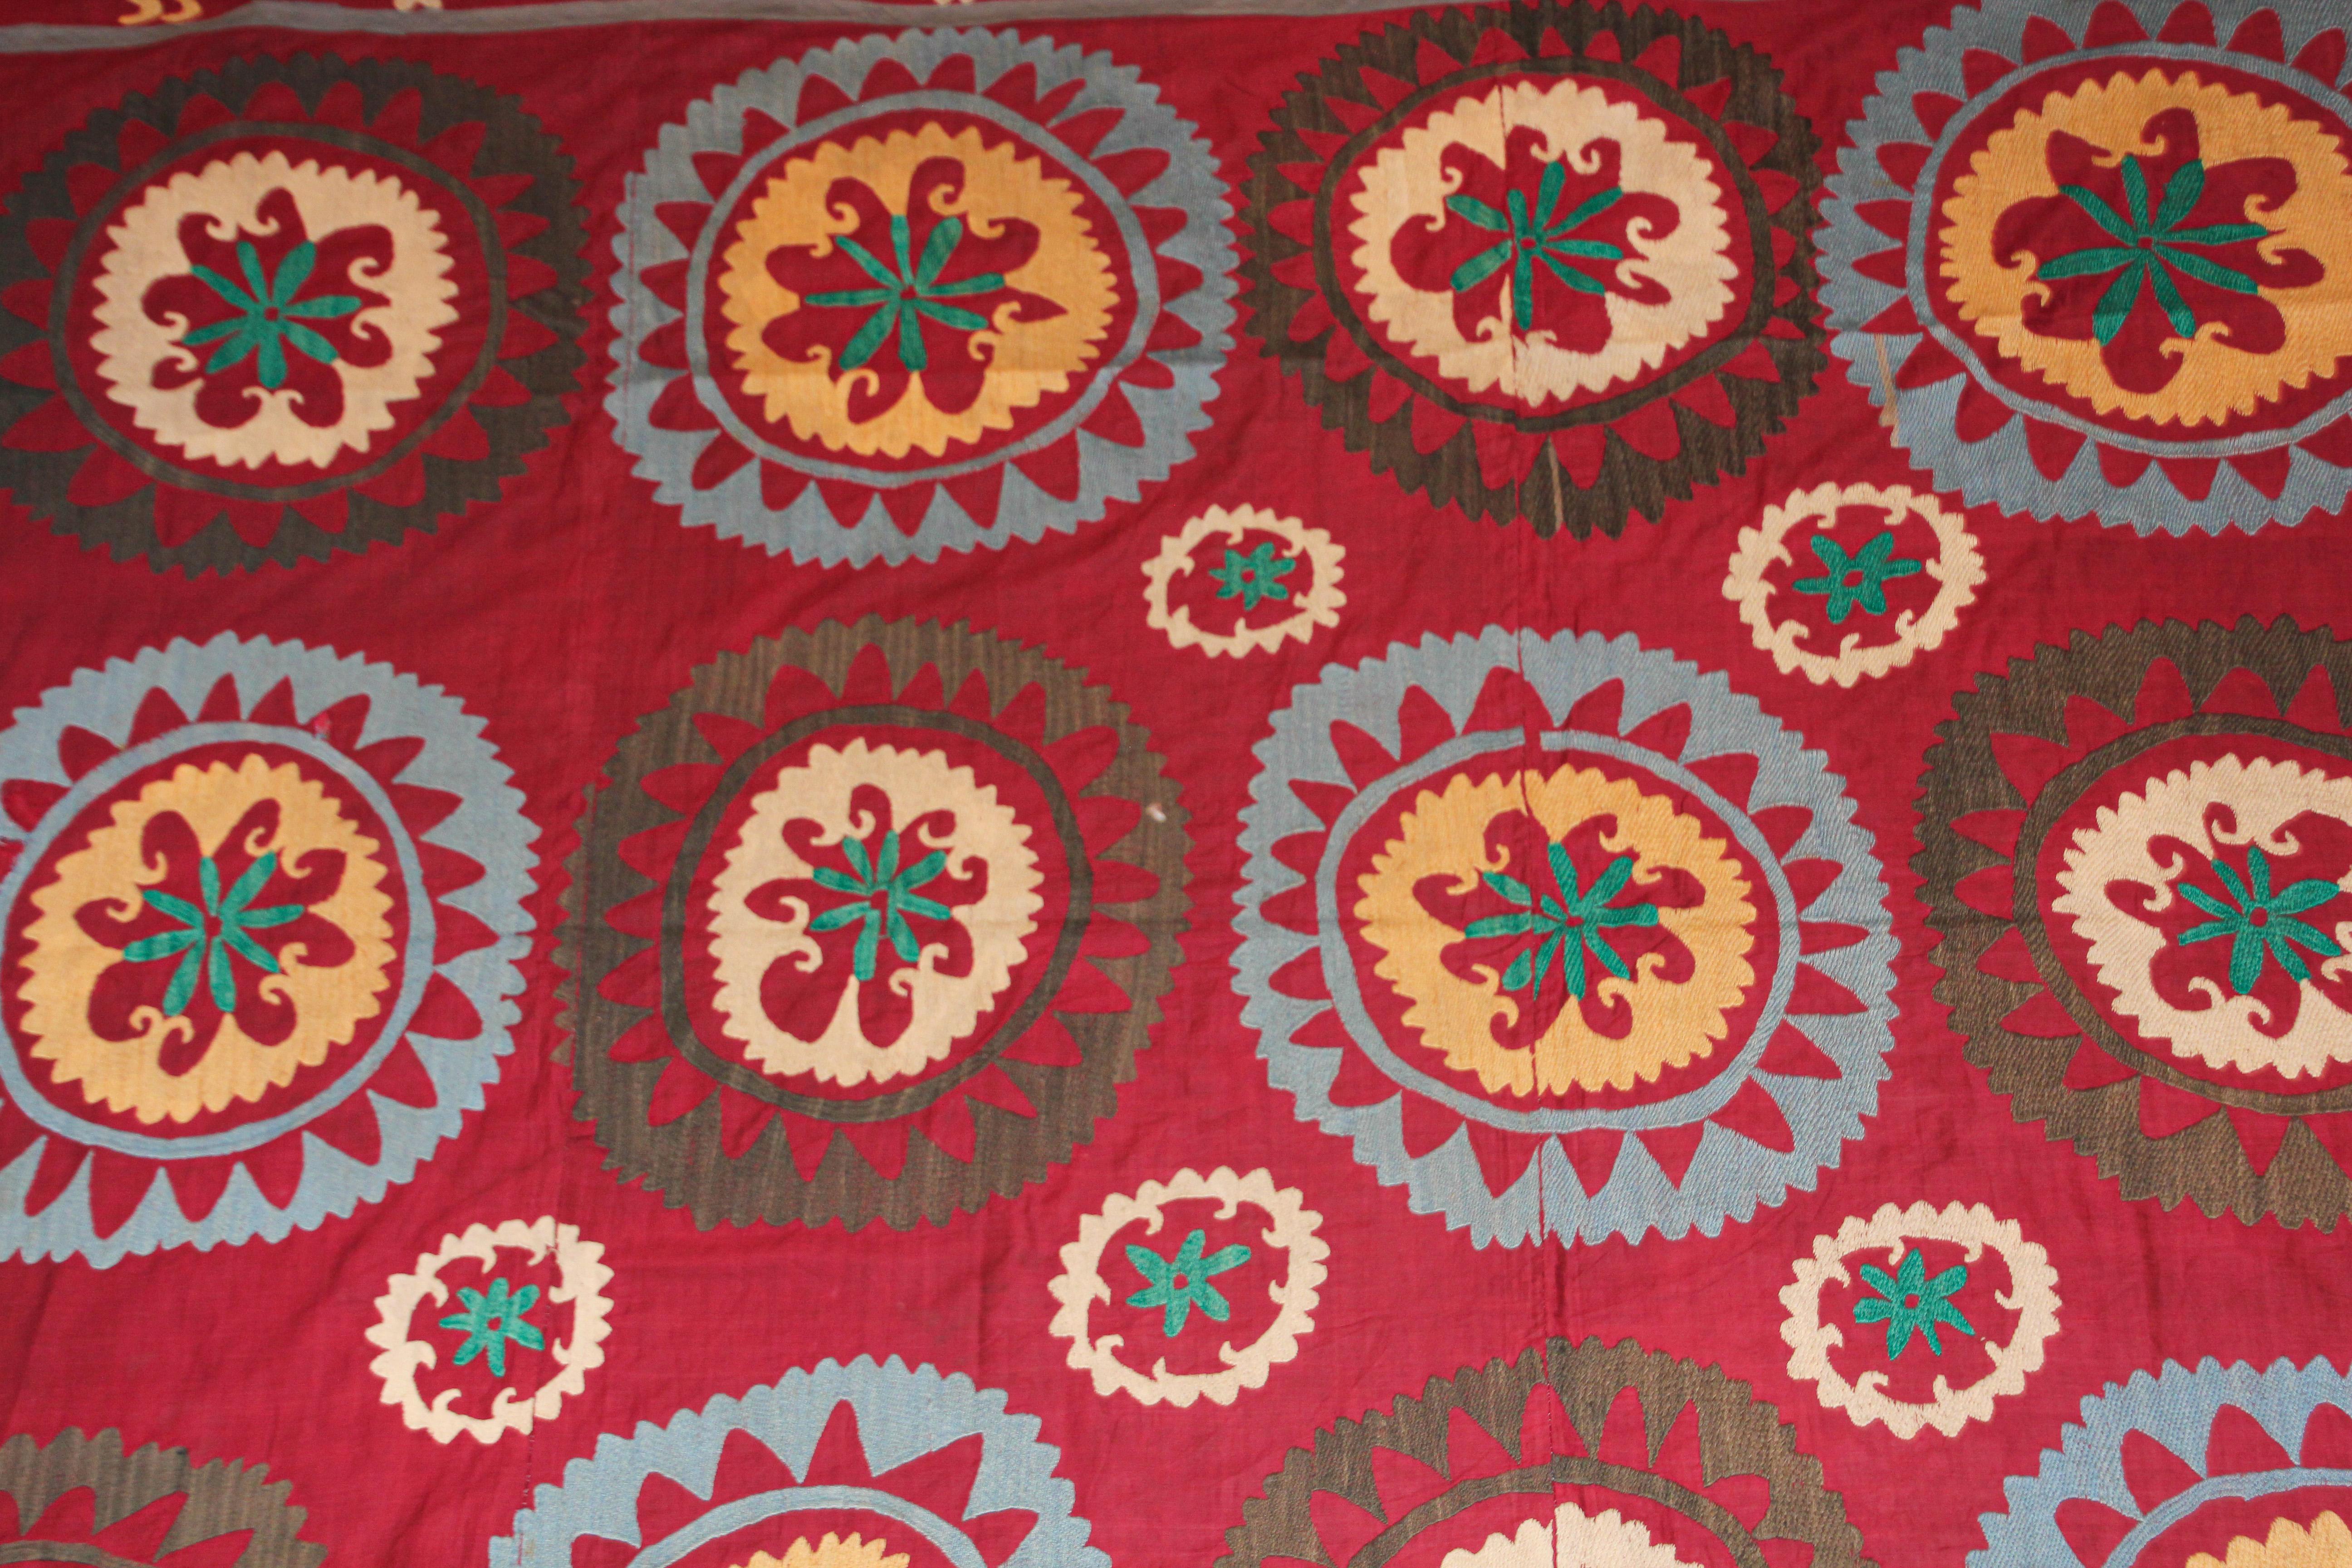 Folk Art Vintage Uzbek Suzani Needlework Textile Blanket or Tapestry